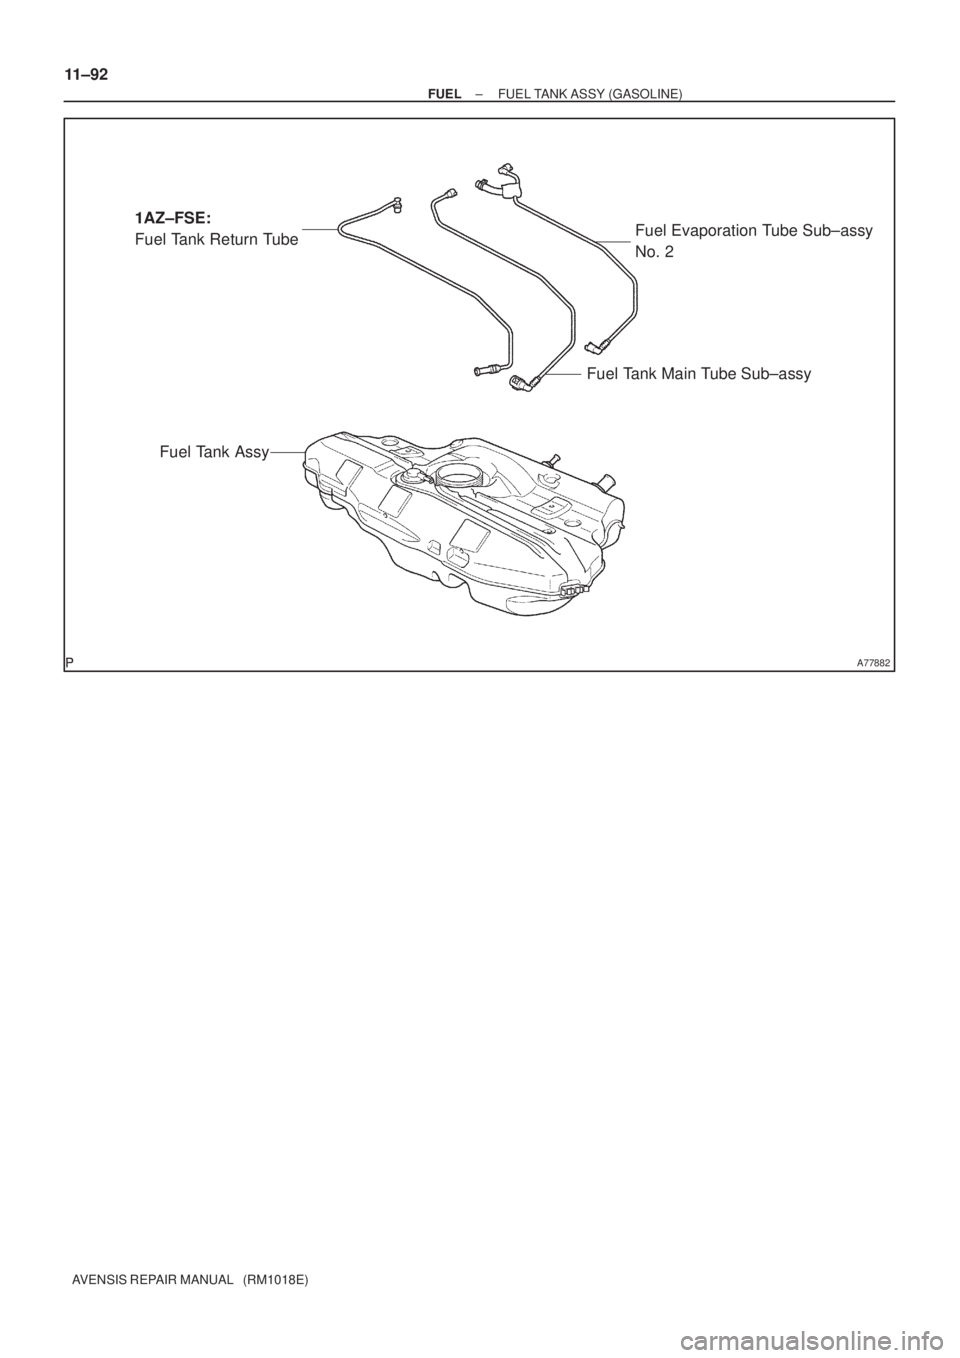 TOYOTA AVENSIS 2005  Service Repair Manual A77882
1AZ±FSE:
Fuel Tank Return TubeFuel Evaporation Tube Sub±assy 
No. 2
Fuel Tank Main Tube Sub±assy
Fuel Tank Assy
11±92
± FUELFUEL TANK ASSY (GASOLINE)
AVENSIS REPAIR MANUAL   (RM1018E) 